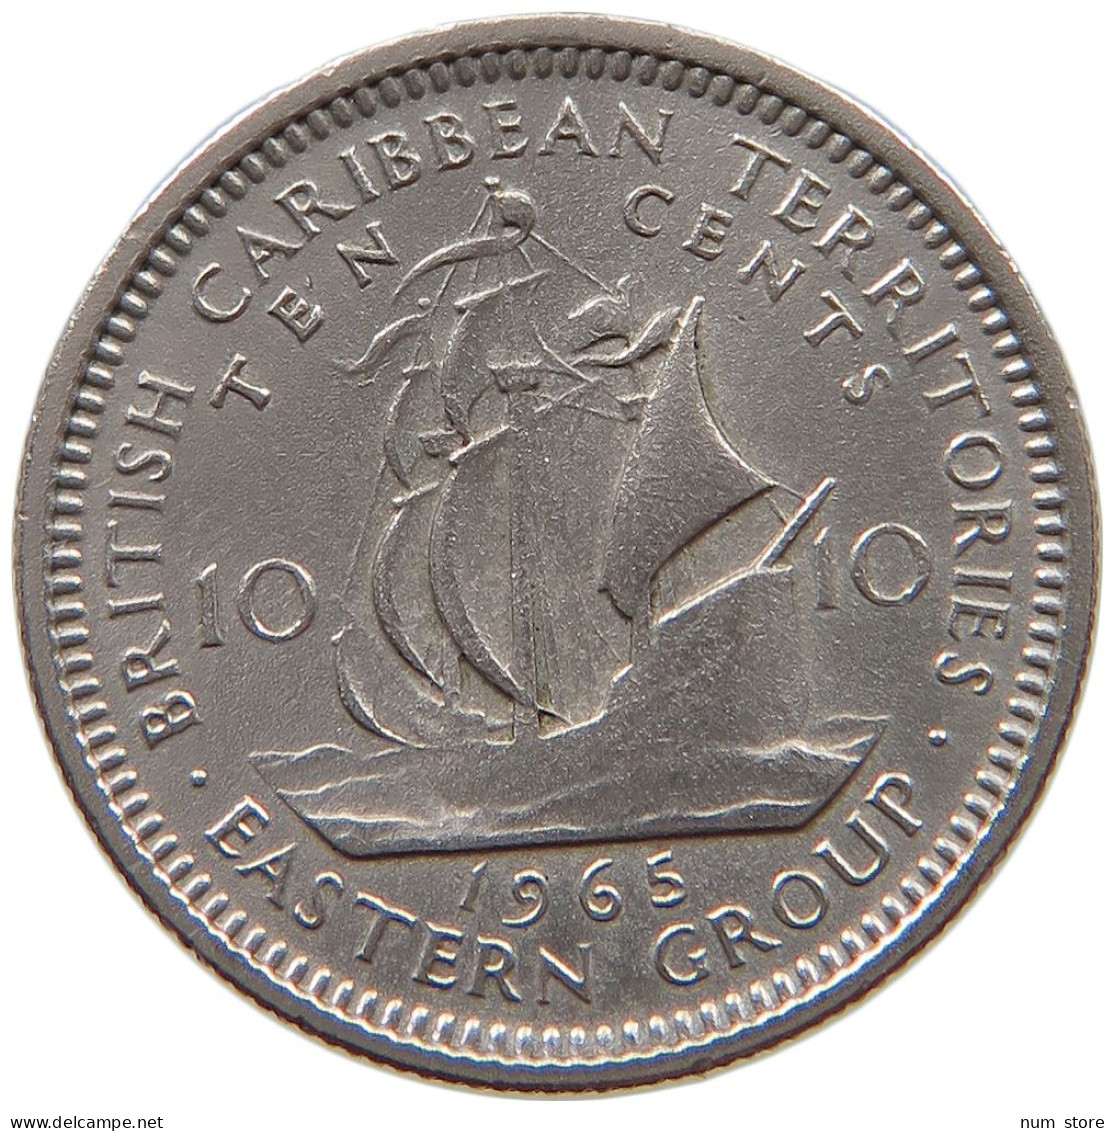 BRITISH CARIBBEAN TERRITORIES 10 CENTS 1965 Elizabeth II. (1952-2022) #a061 0713 - Caraibi Britannici (Territori)